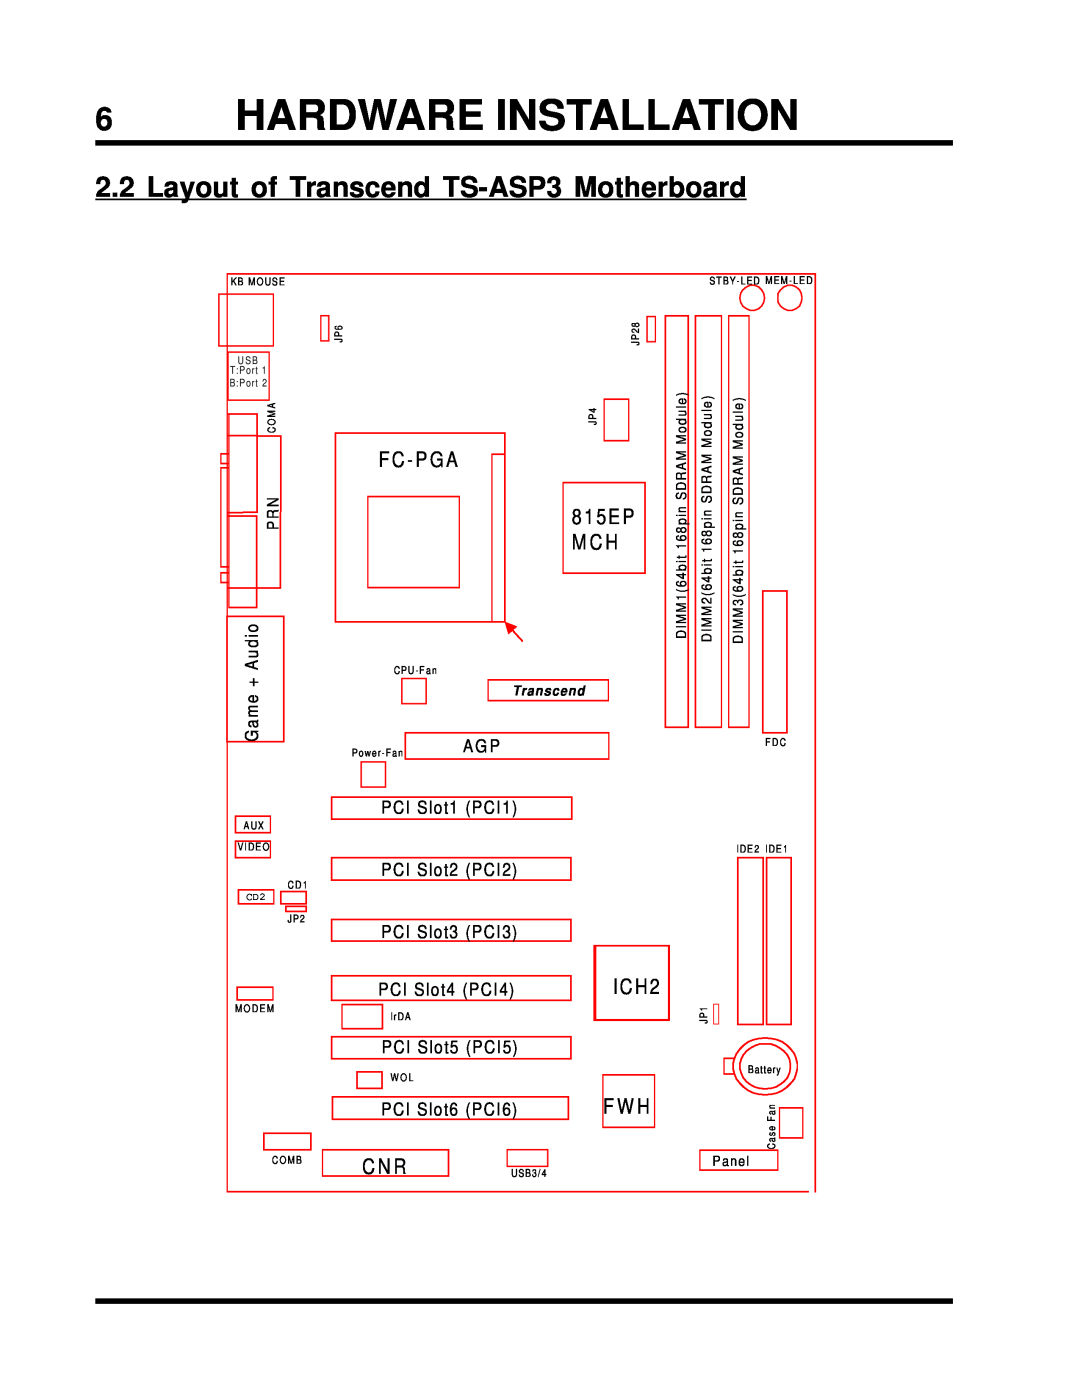 Intel Hardware Installation, Layout of Transcend TS-ASP3Motherboard, F C - P G A, Audio, Game, I C H, Panel, Module 